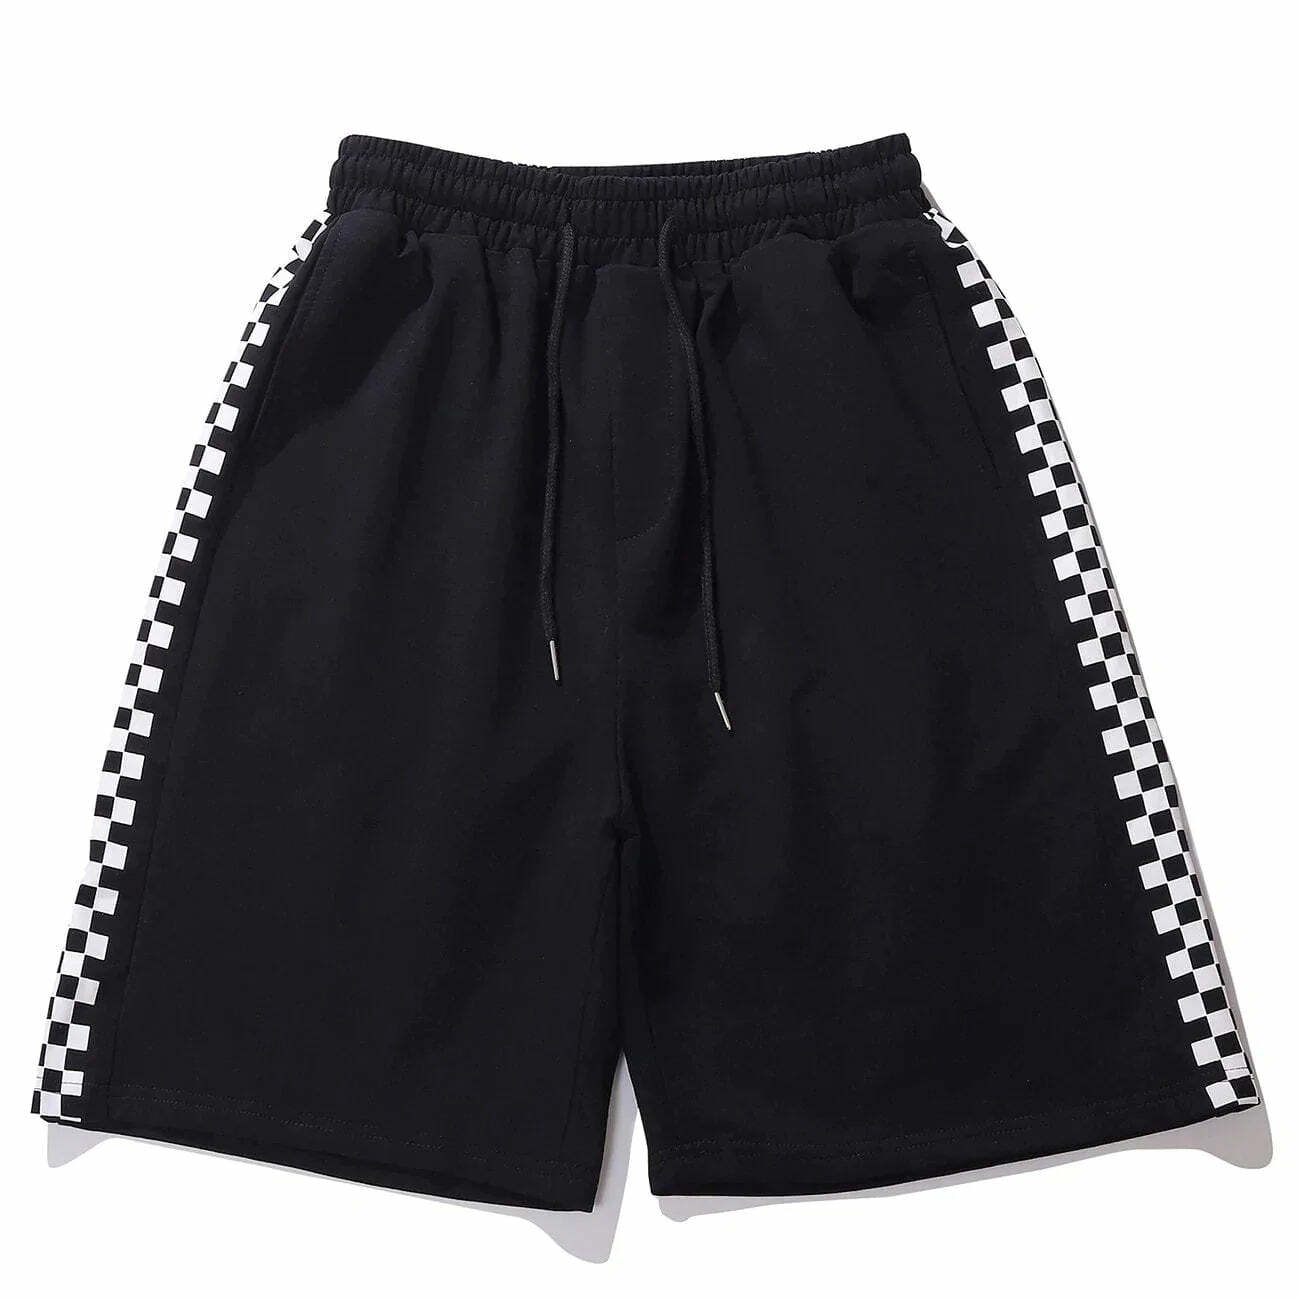 checkerboard print shorts edgy streetwear staple 7018